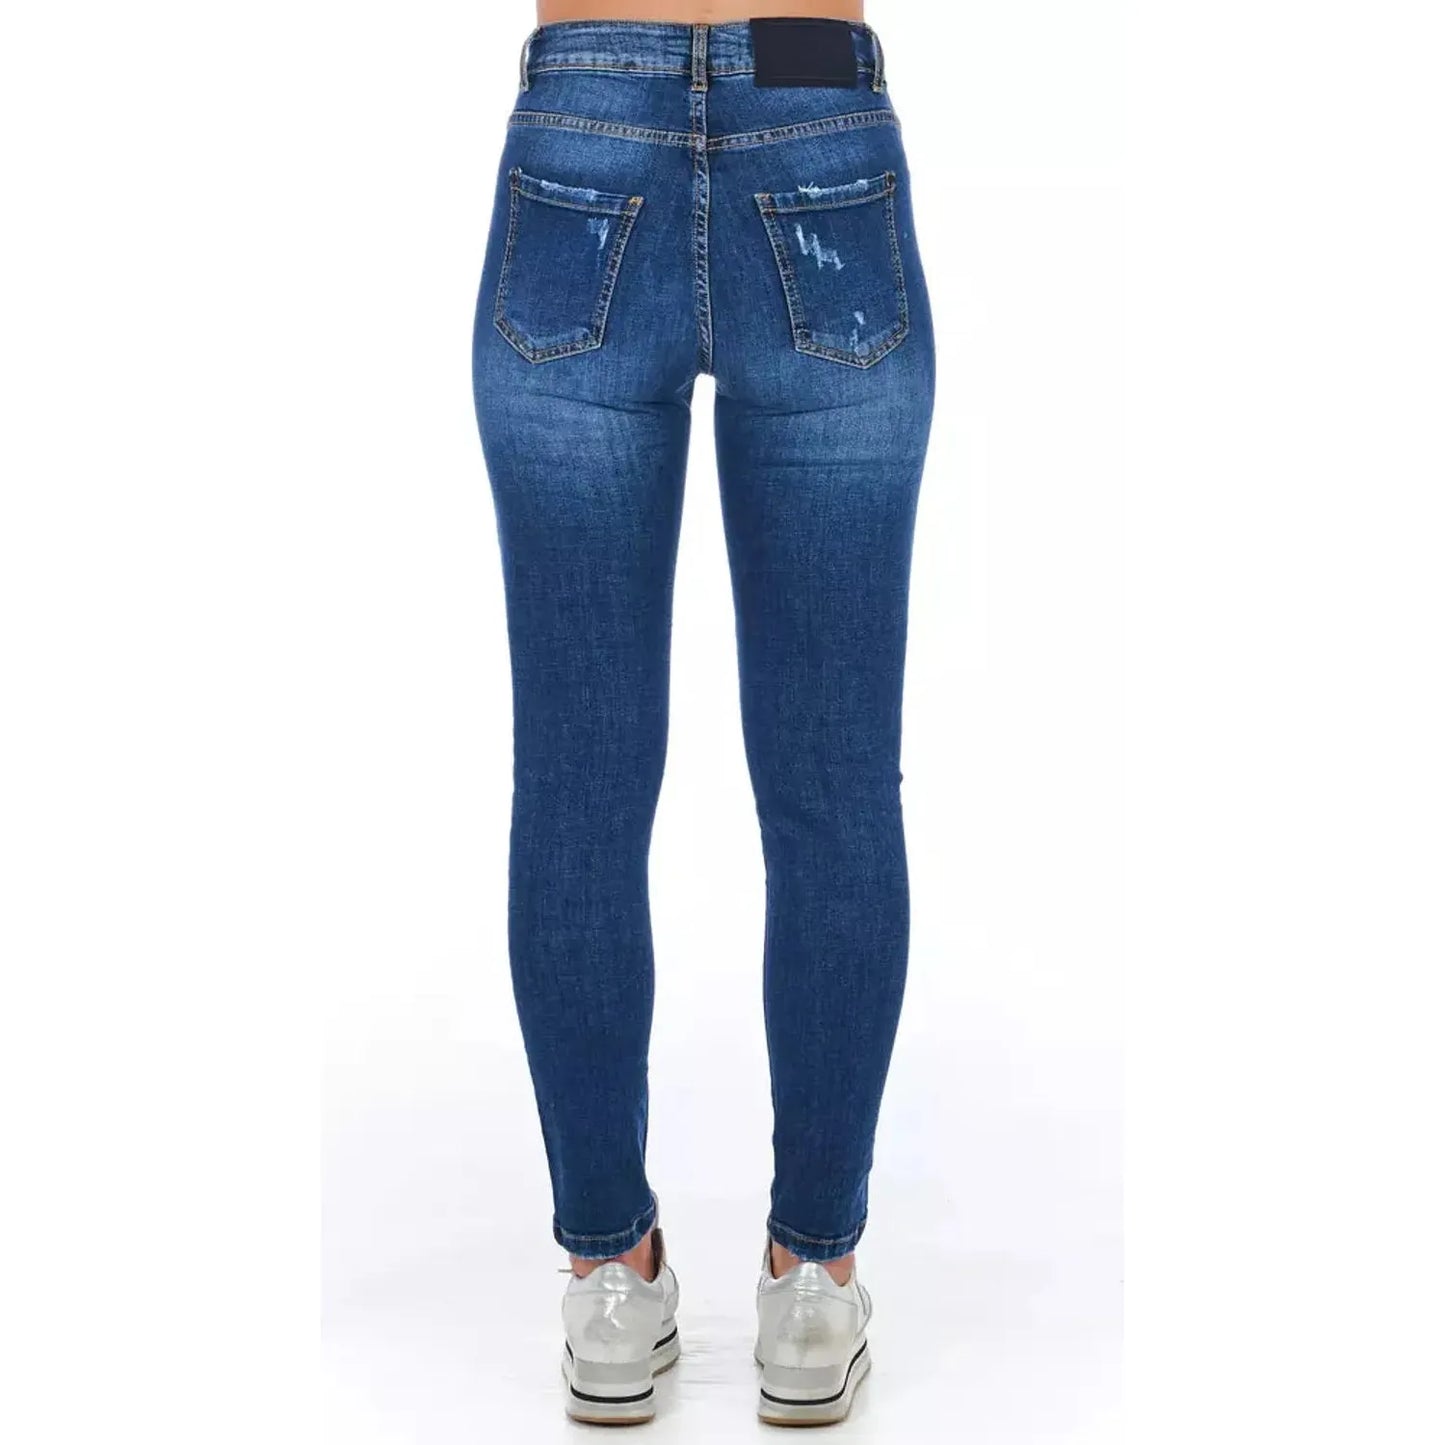 Frankie Morello Chic Worn Wash Denim Jeans for Sophisticated Style blue-jeans-pant-5 product-21771-1208127544-21-29c1837e-57d.webp